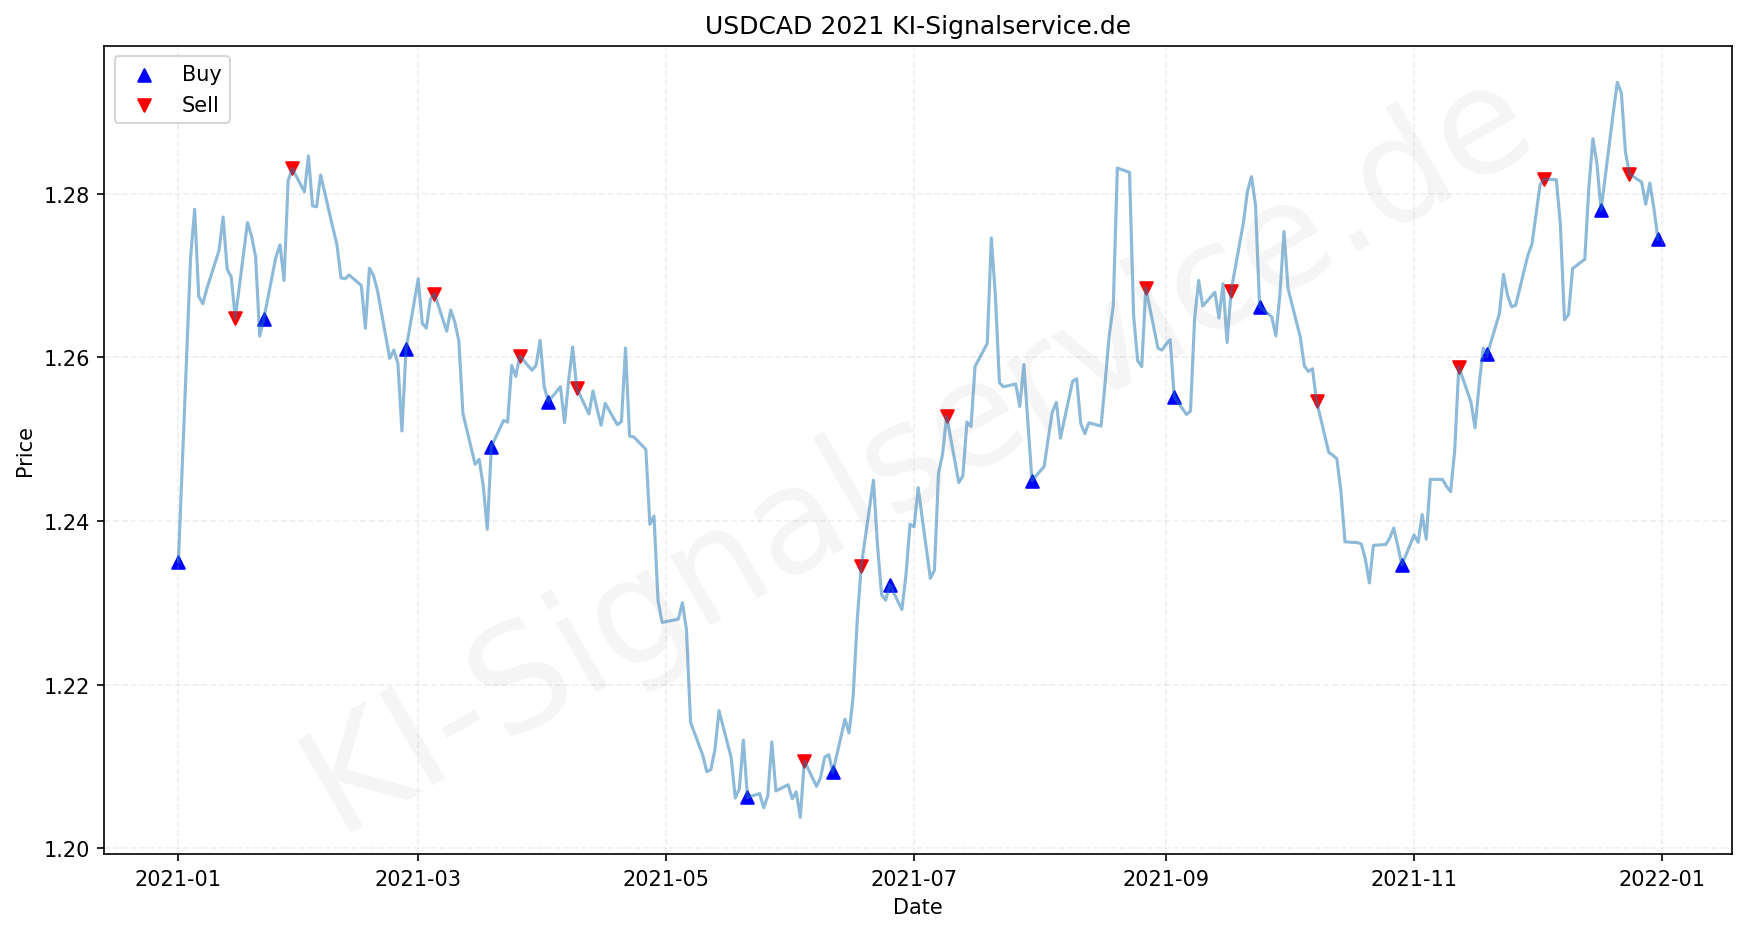 USDCAD Chart - KI Tradingsignale 2021